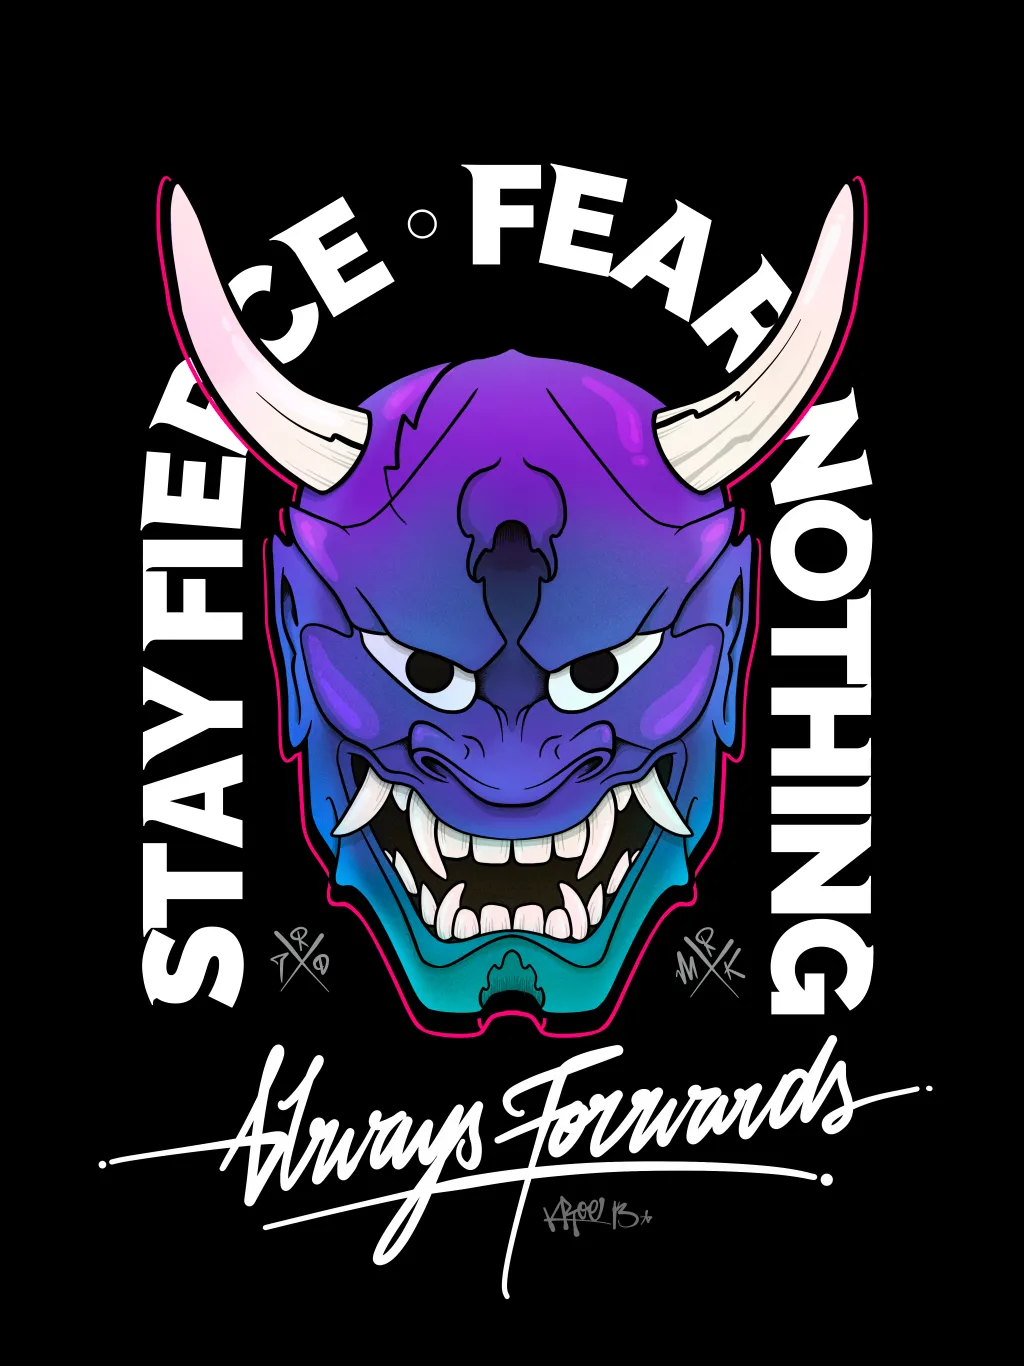 Stay Fierce, Fear Nothing - Illustrated in Procreate